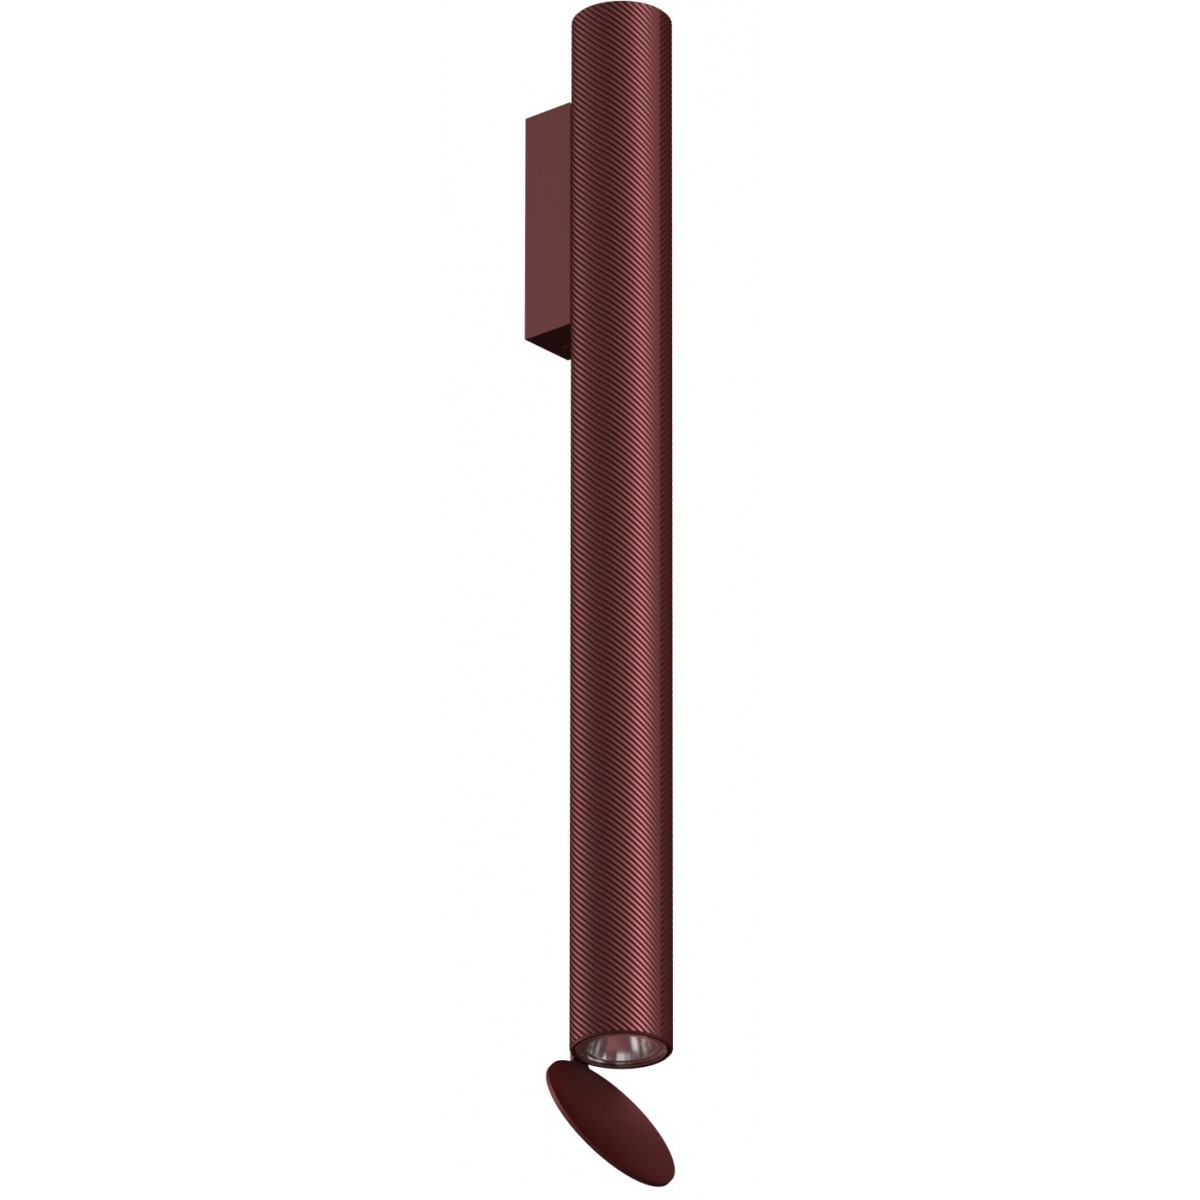 Flauta H50cm – Spiga, anodized ruby red - indoor